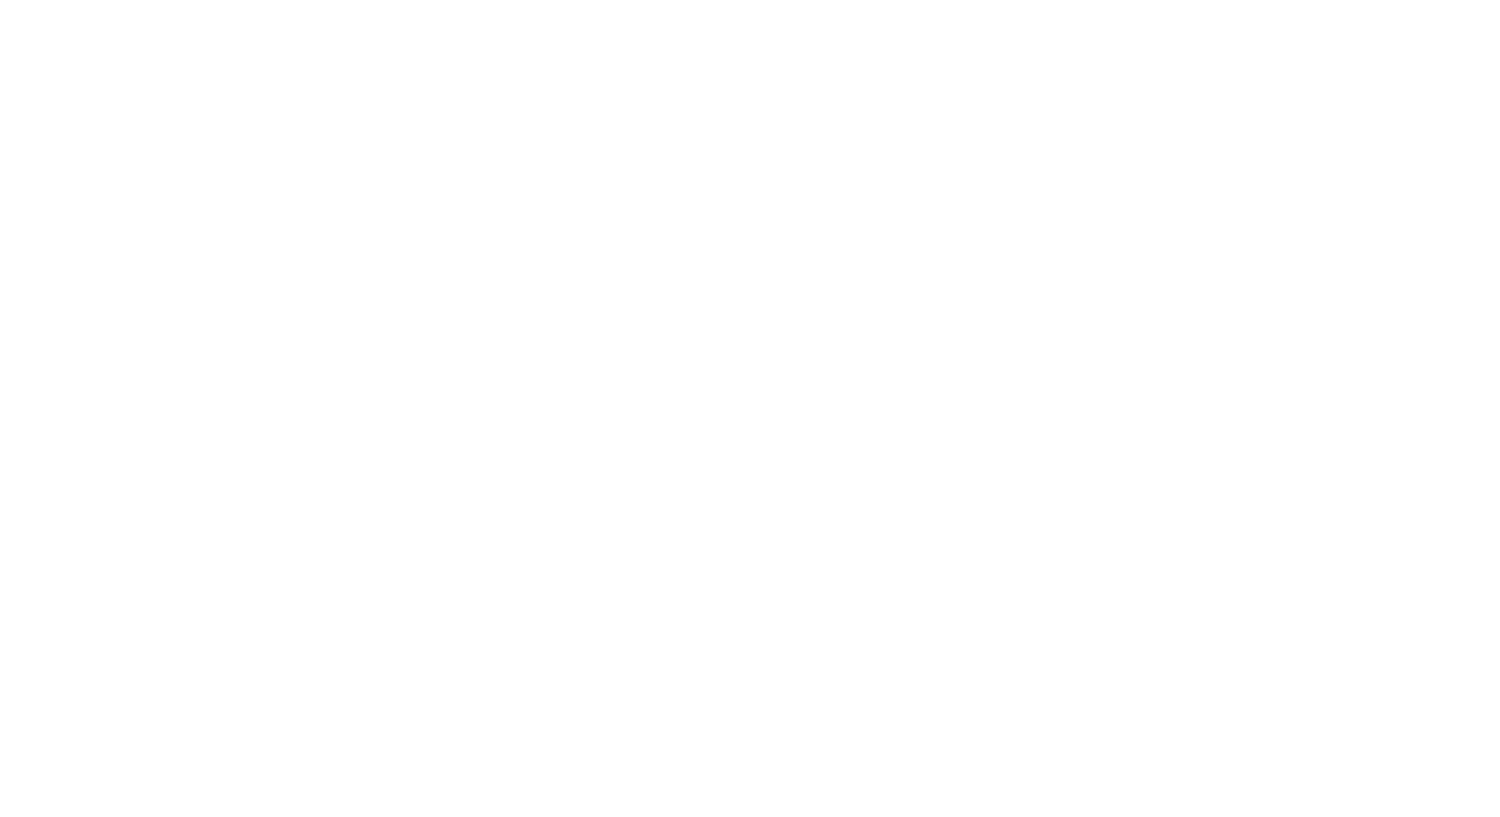 Drone Lab